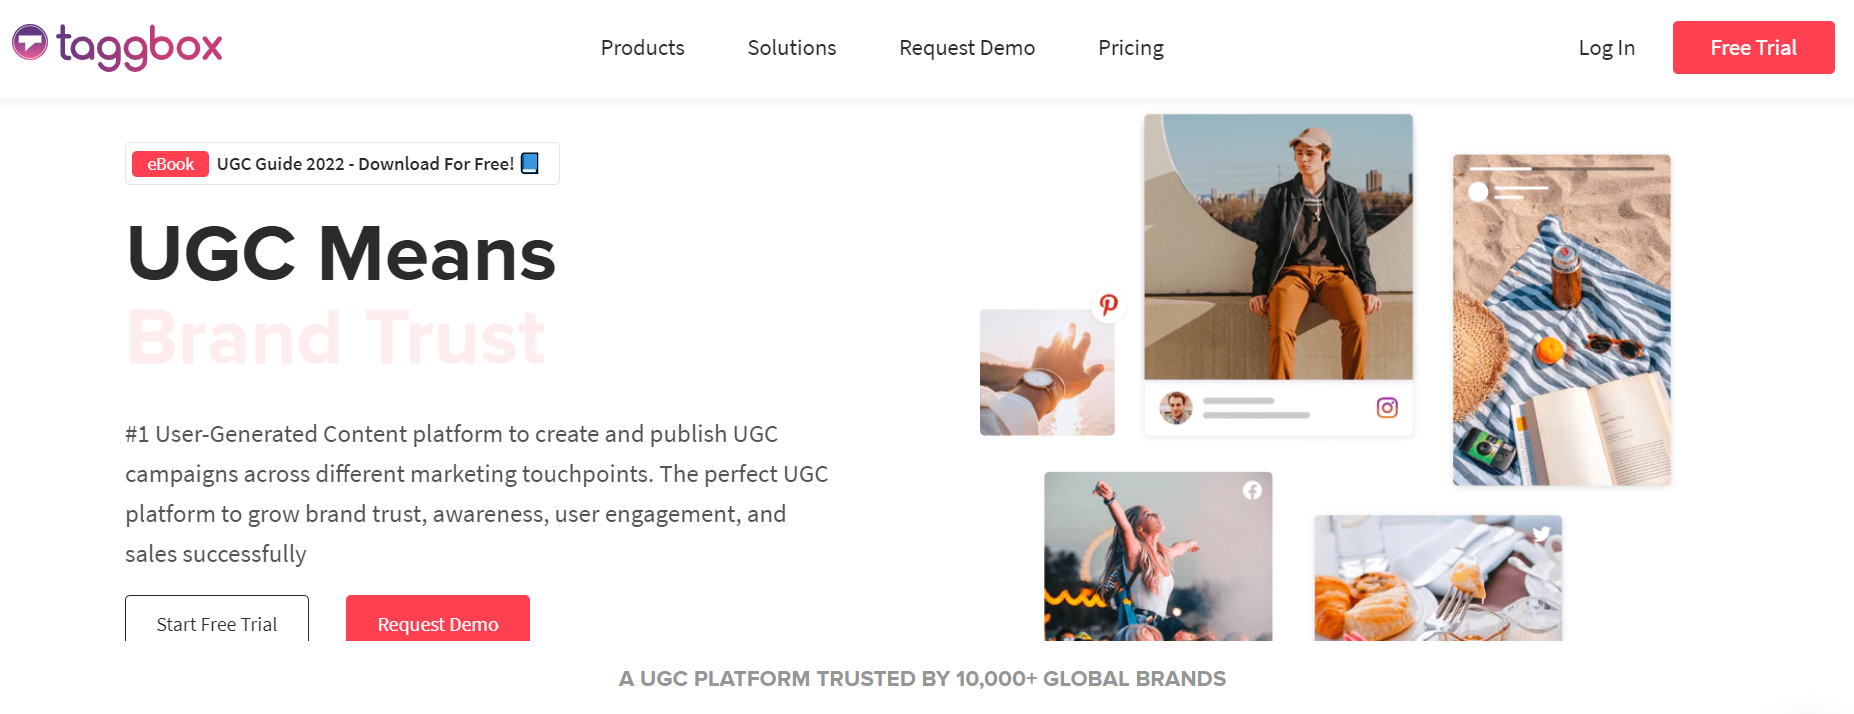 Taggbox homepage: UGC Means Brand Trust